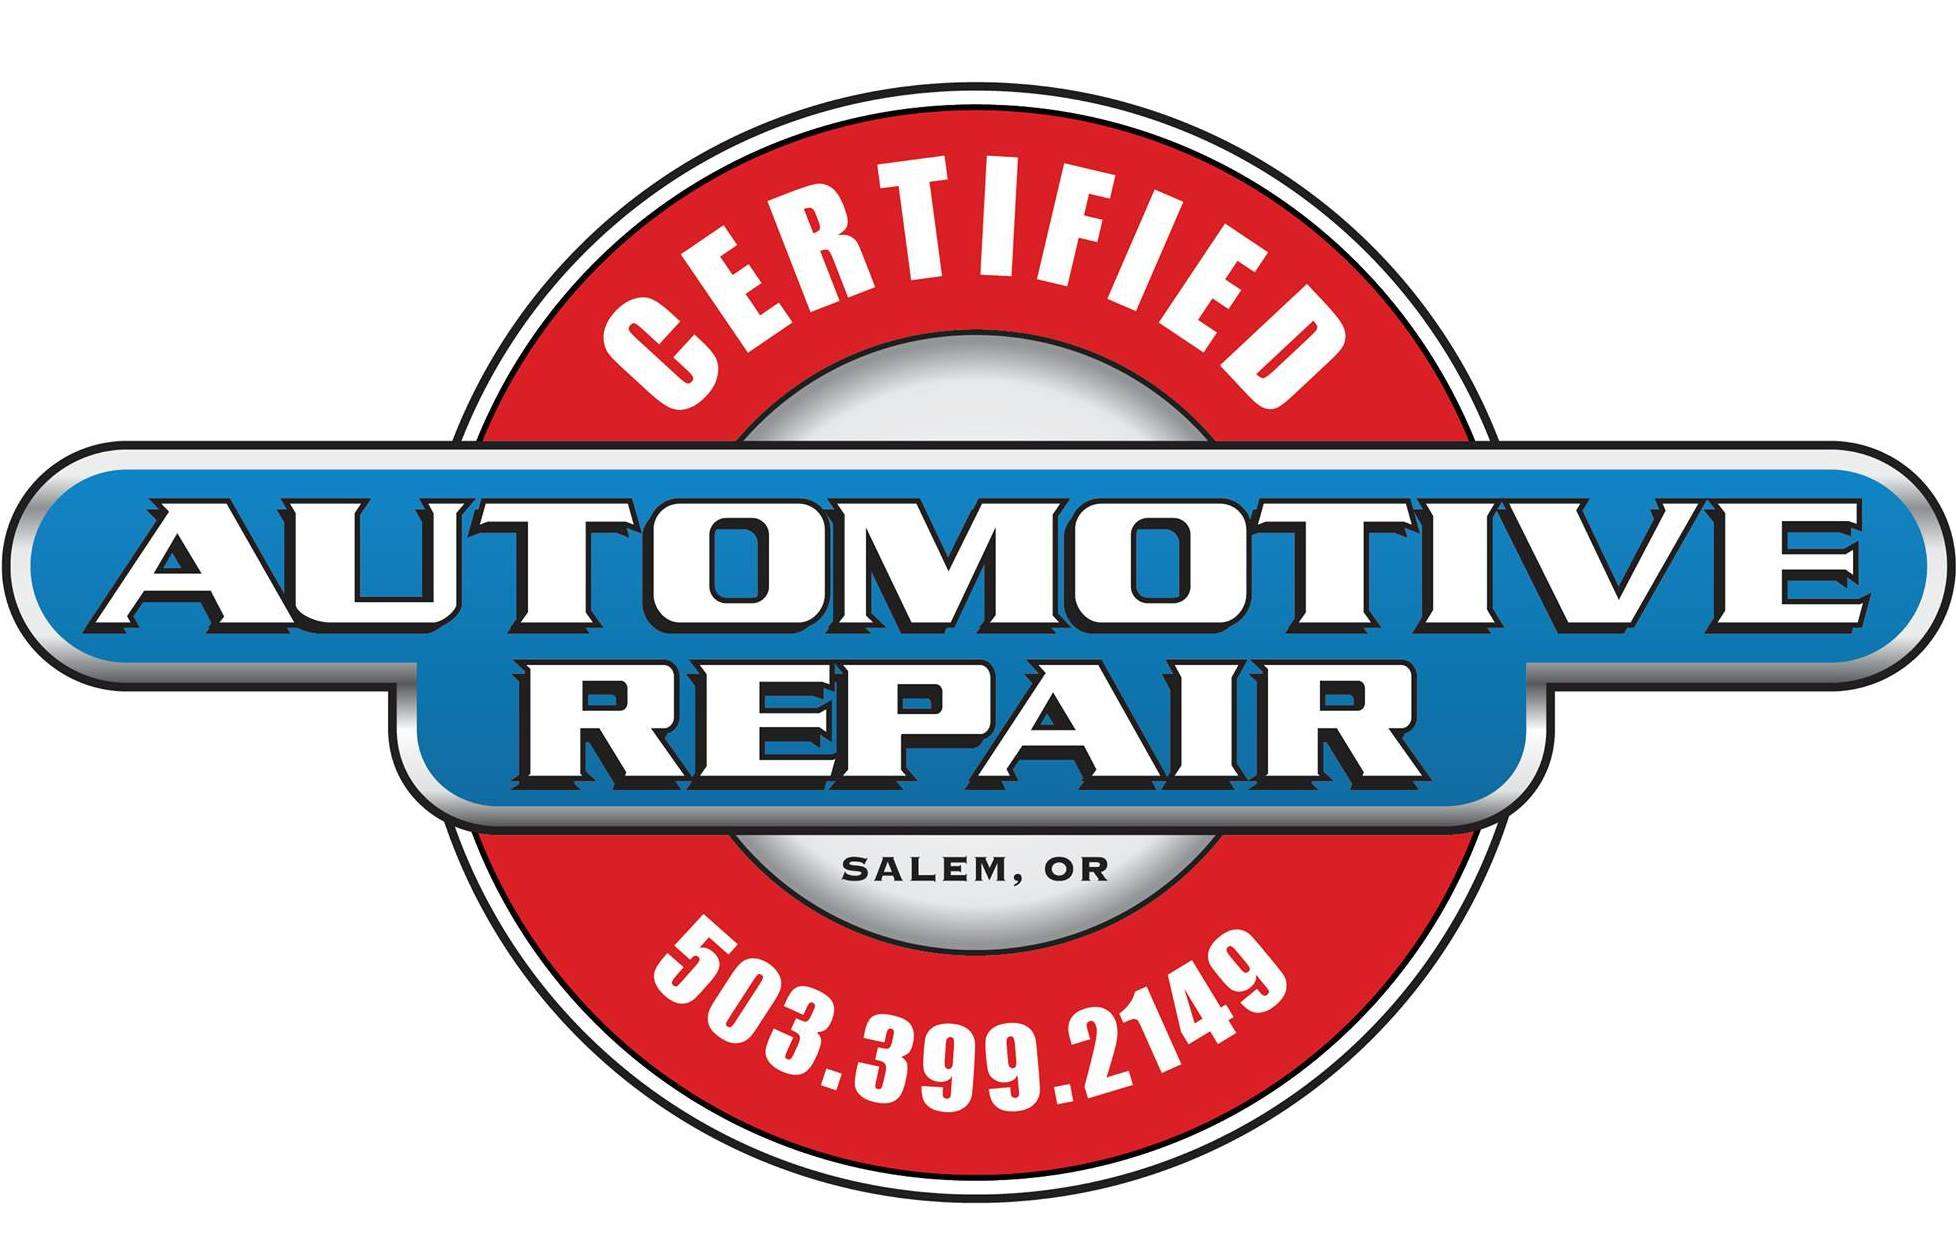 Certified Automotive Repair Logo